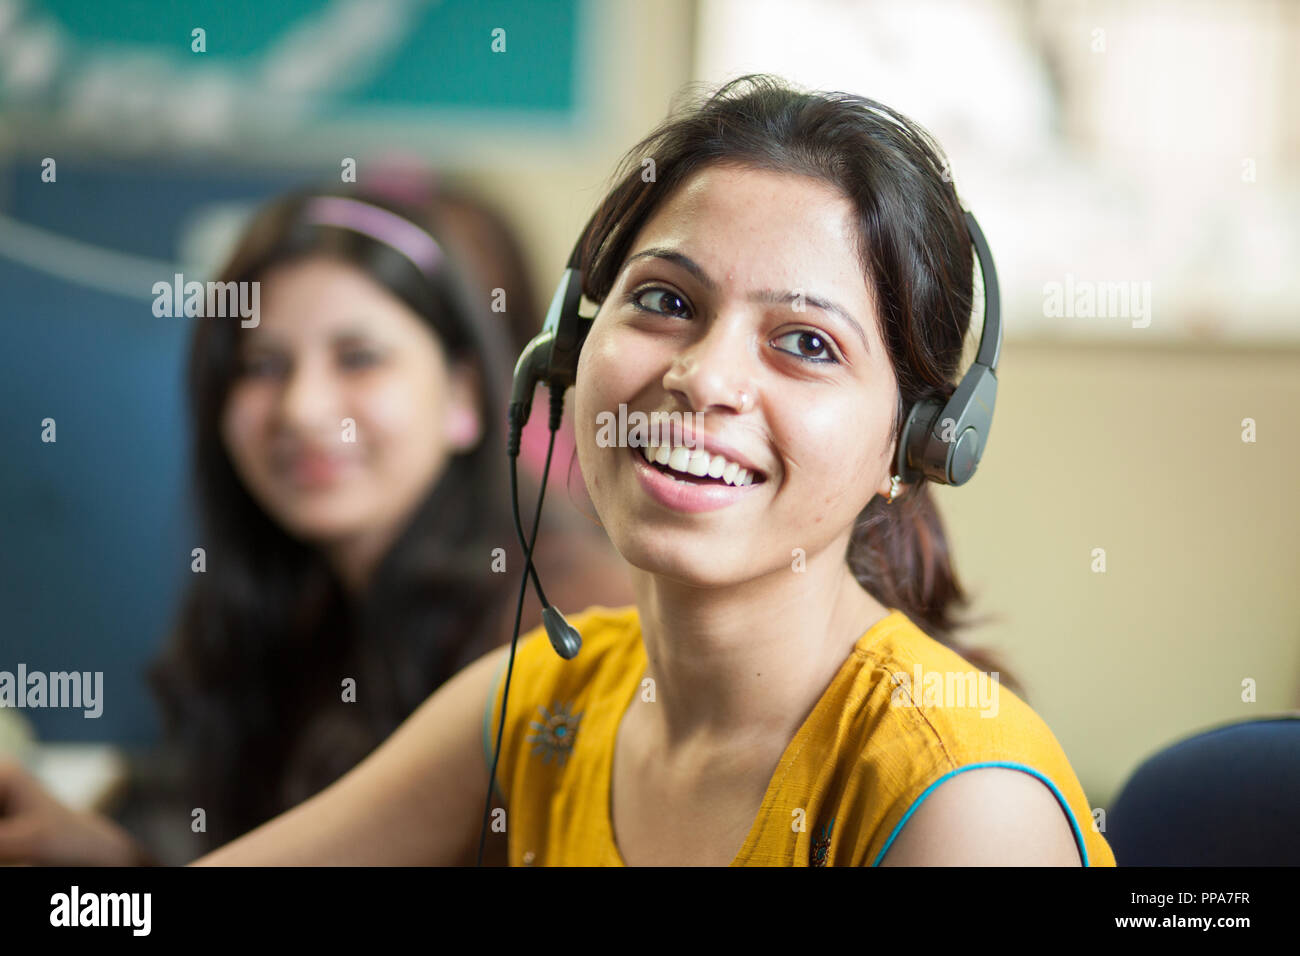 Mumbai Call Beauty With Client